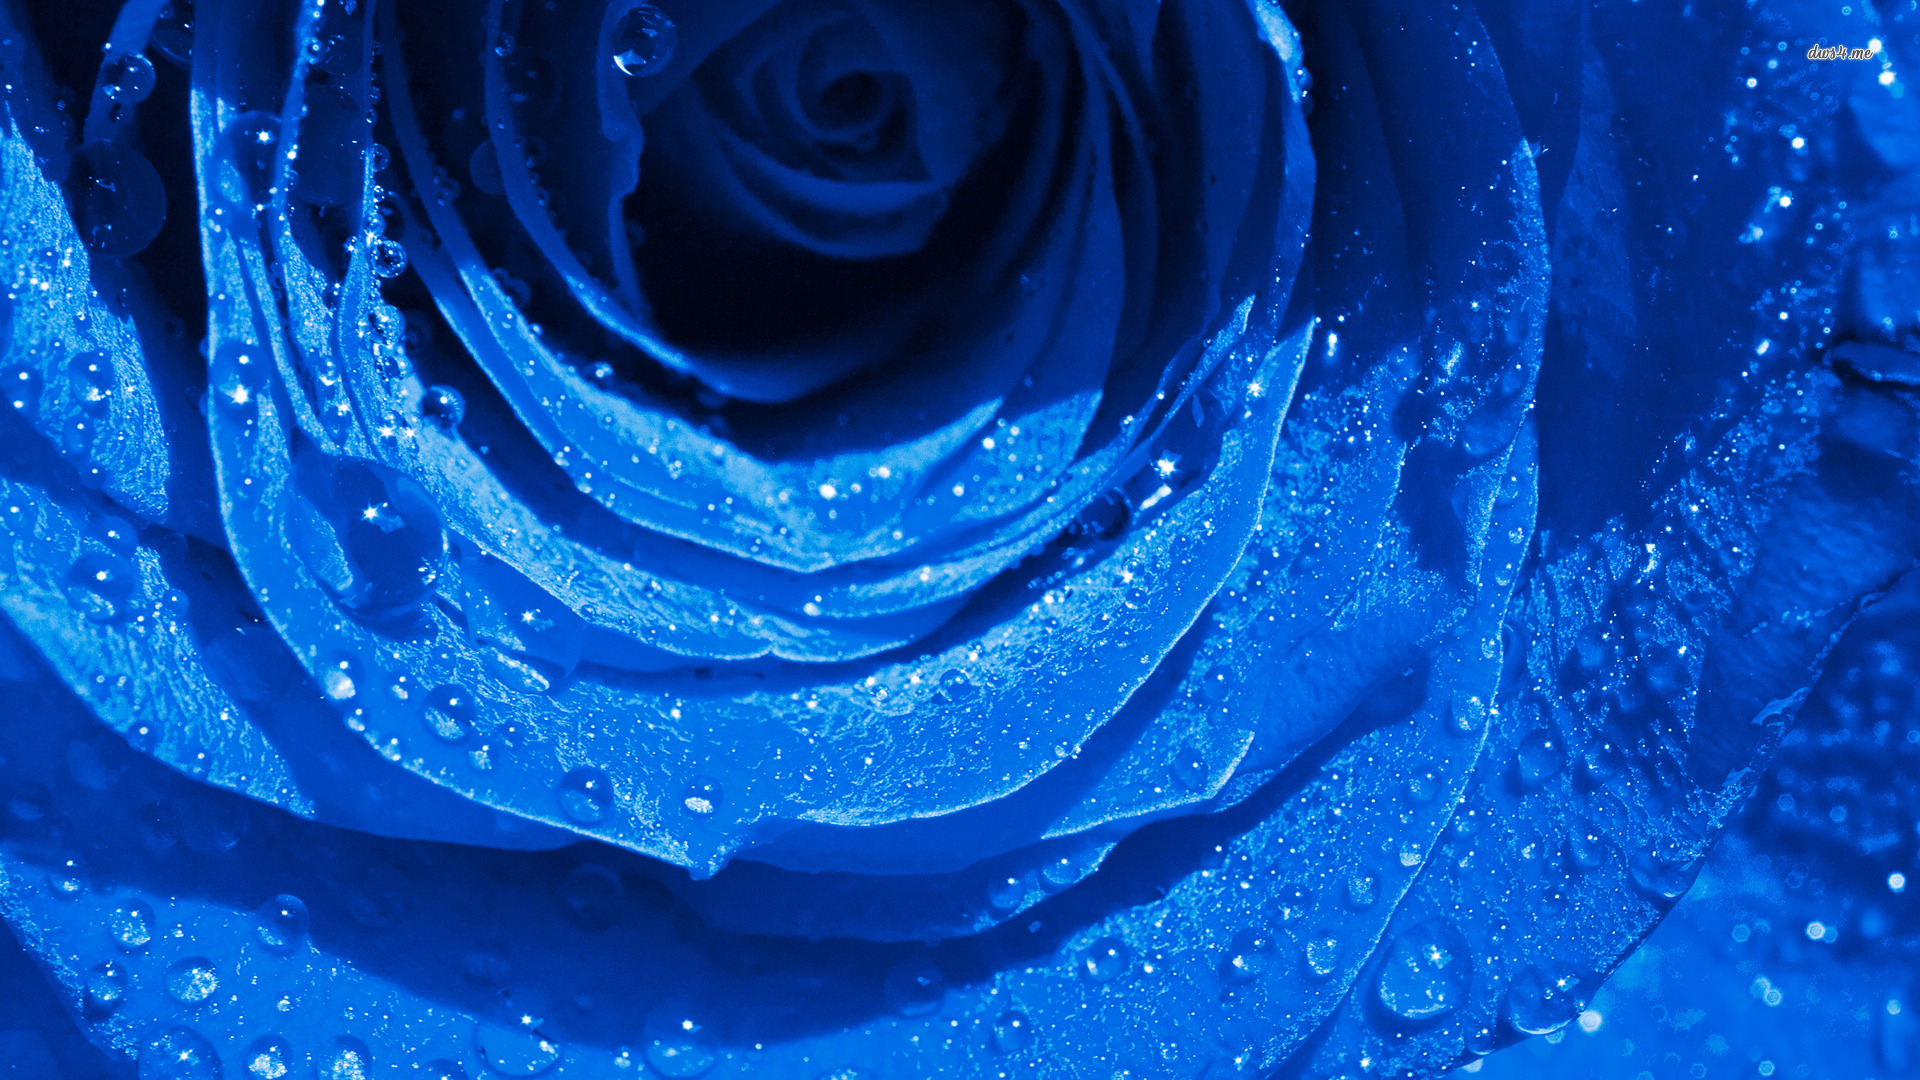 Wallpaper Blue Rose Hd - Royal Blue Rose Hd , HD Wallpaper & Backgrounds